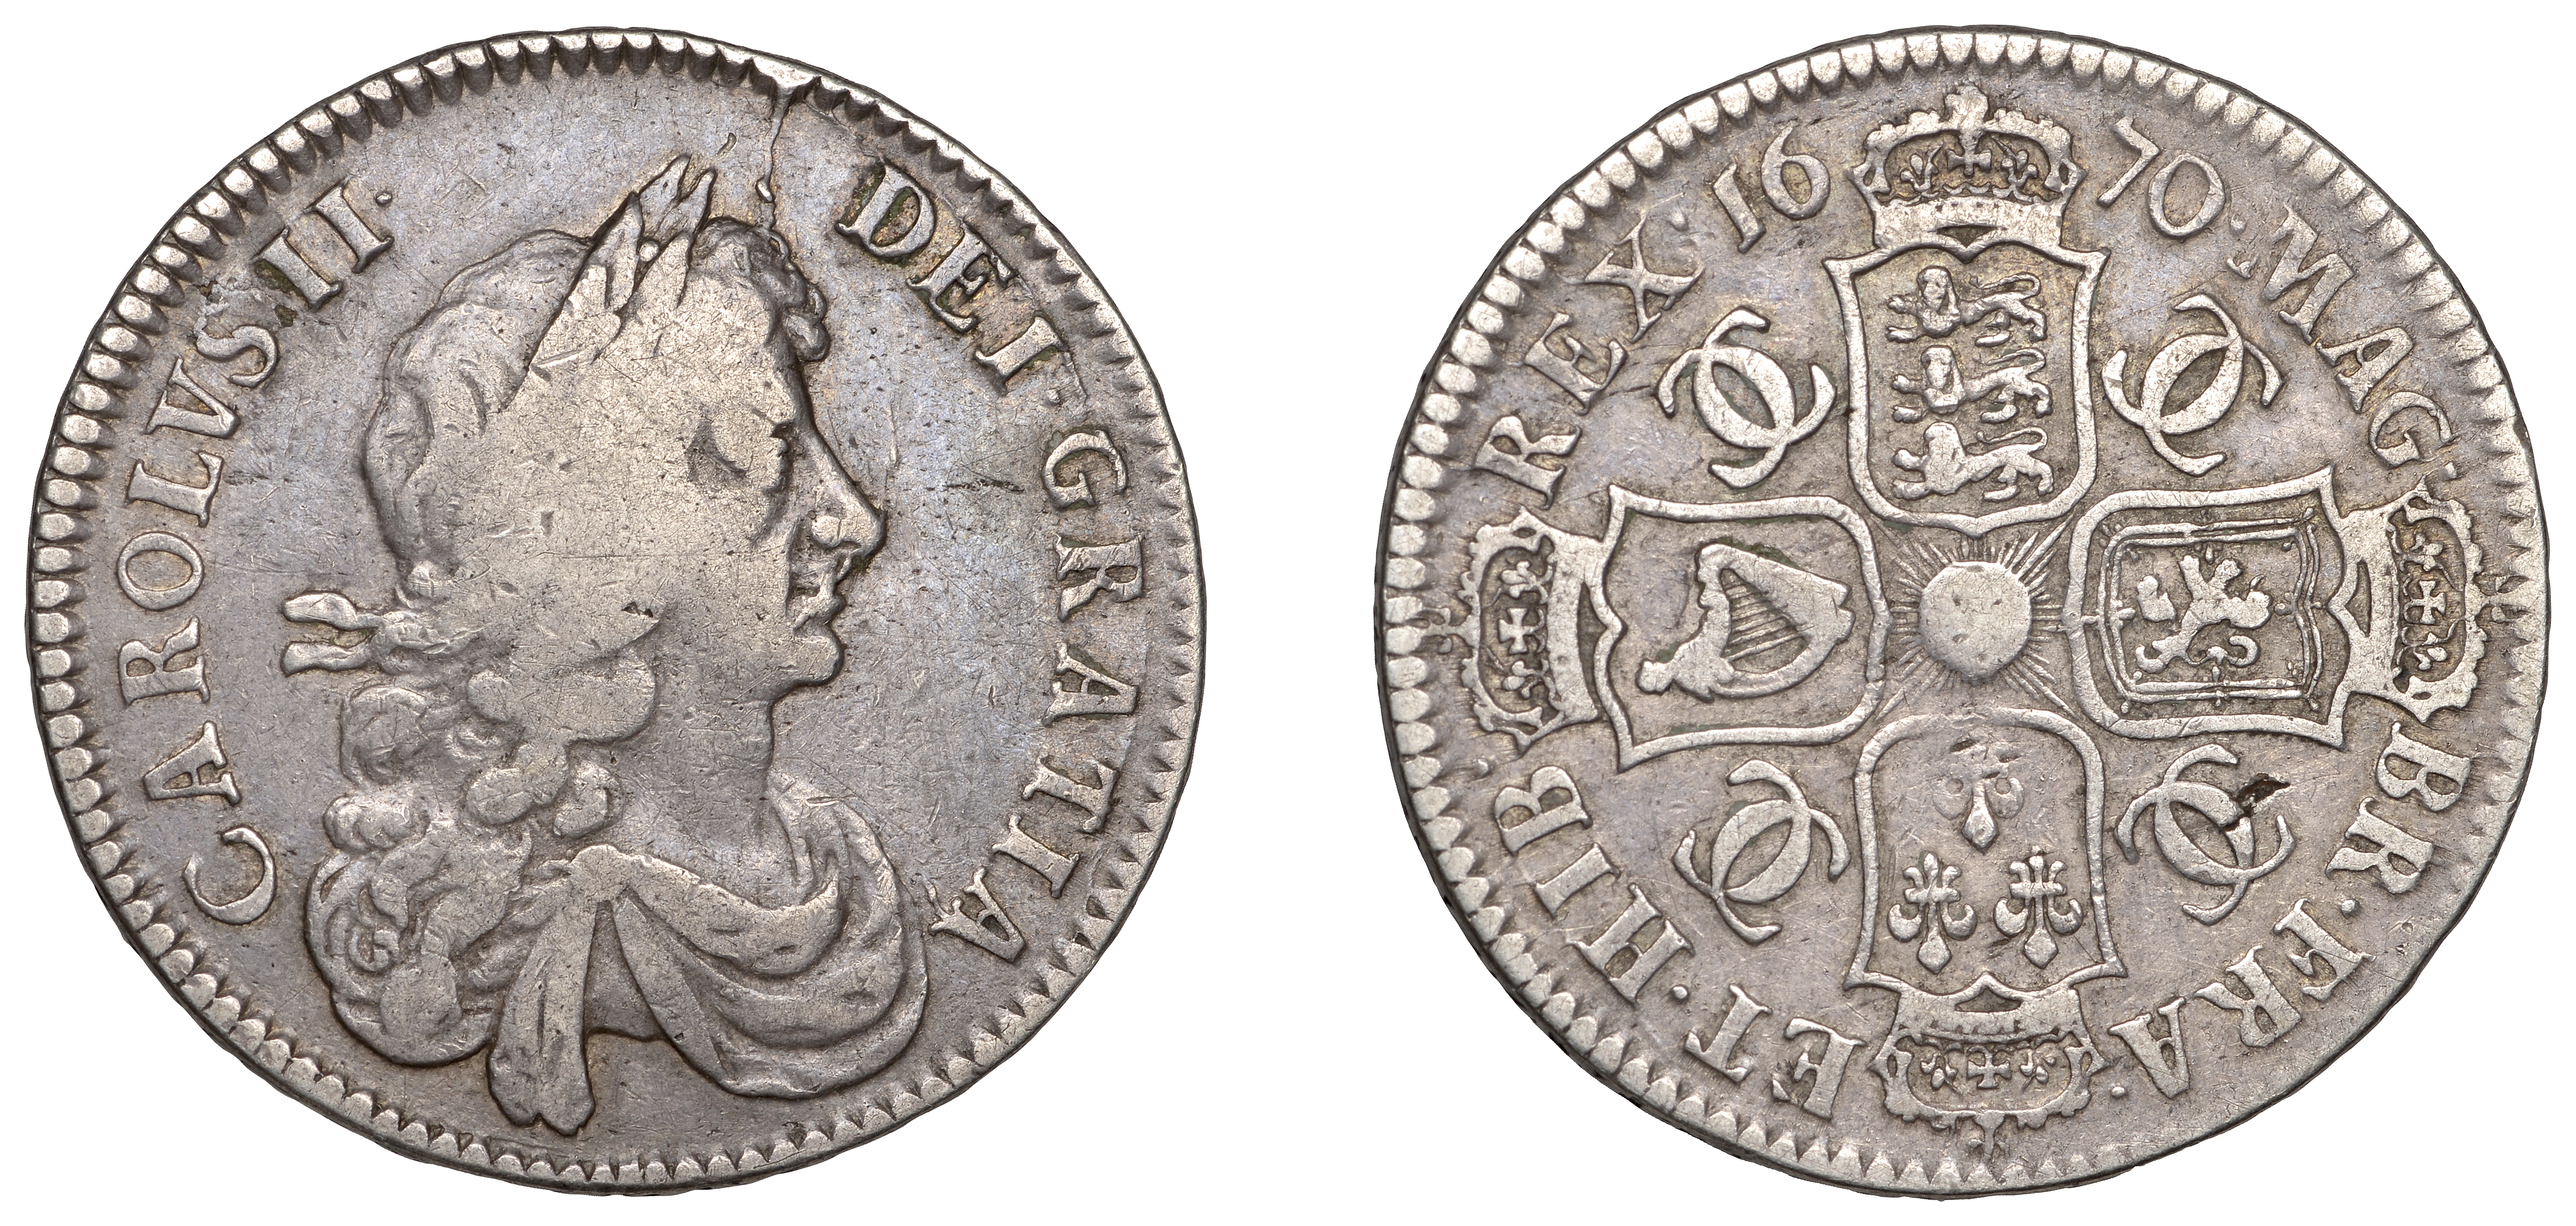 Charles II (1660-1685), Halfcrown, 1670, third bust, edge vicesimo secvndo (ESC 453; S 3365)...